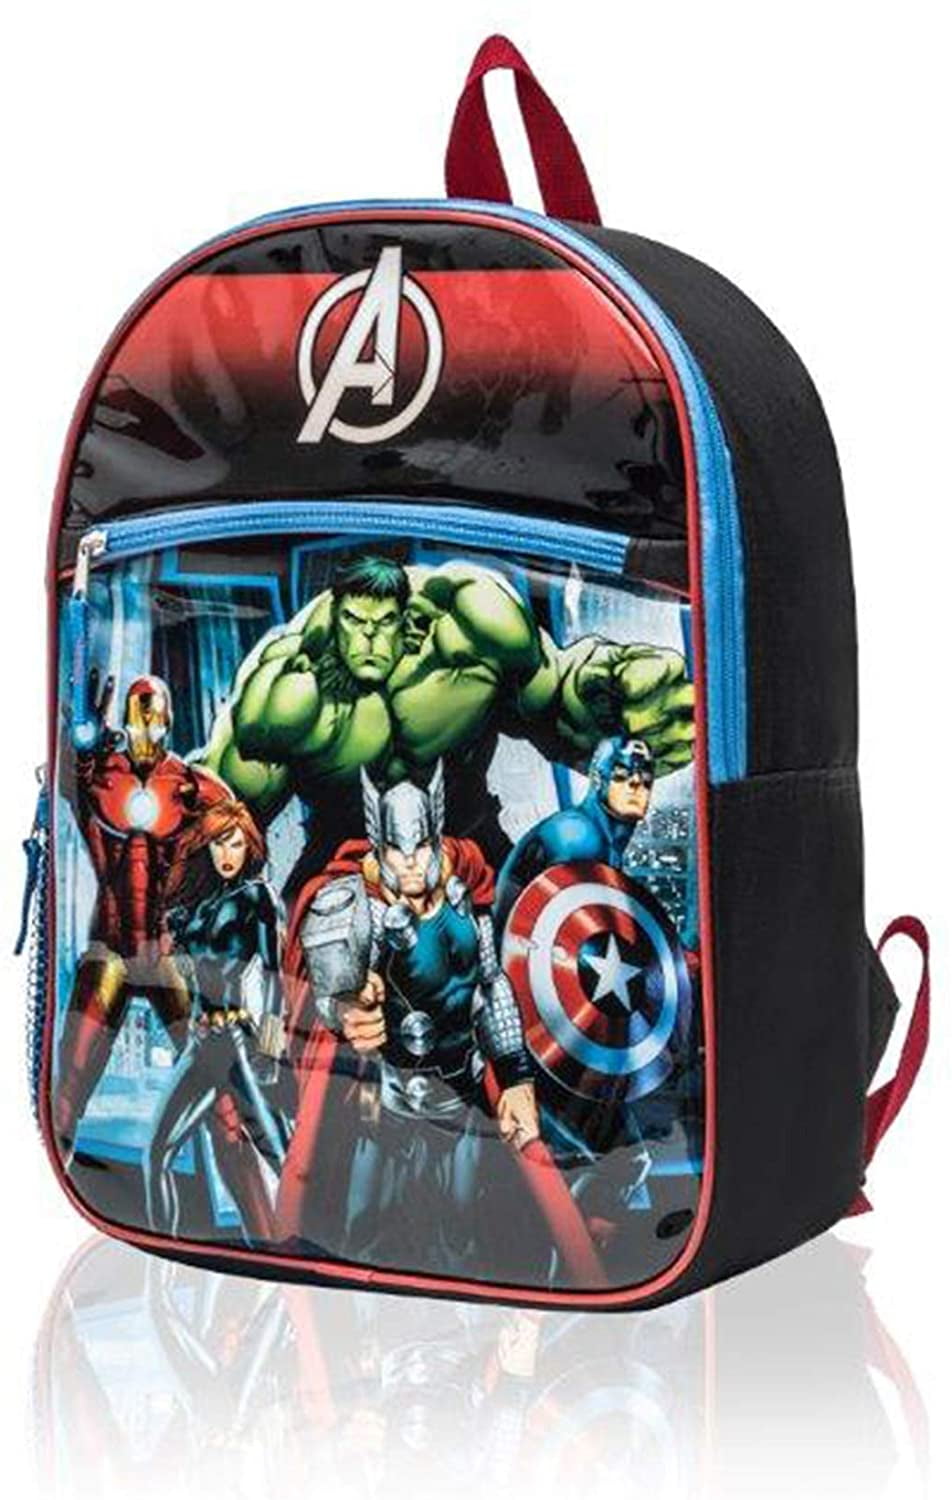 Marvel Avengers Boys School Backpack Book Bag Superheroes Kids Toy Gift Iron Man